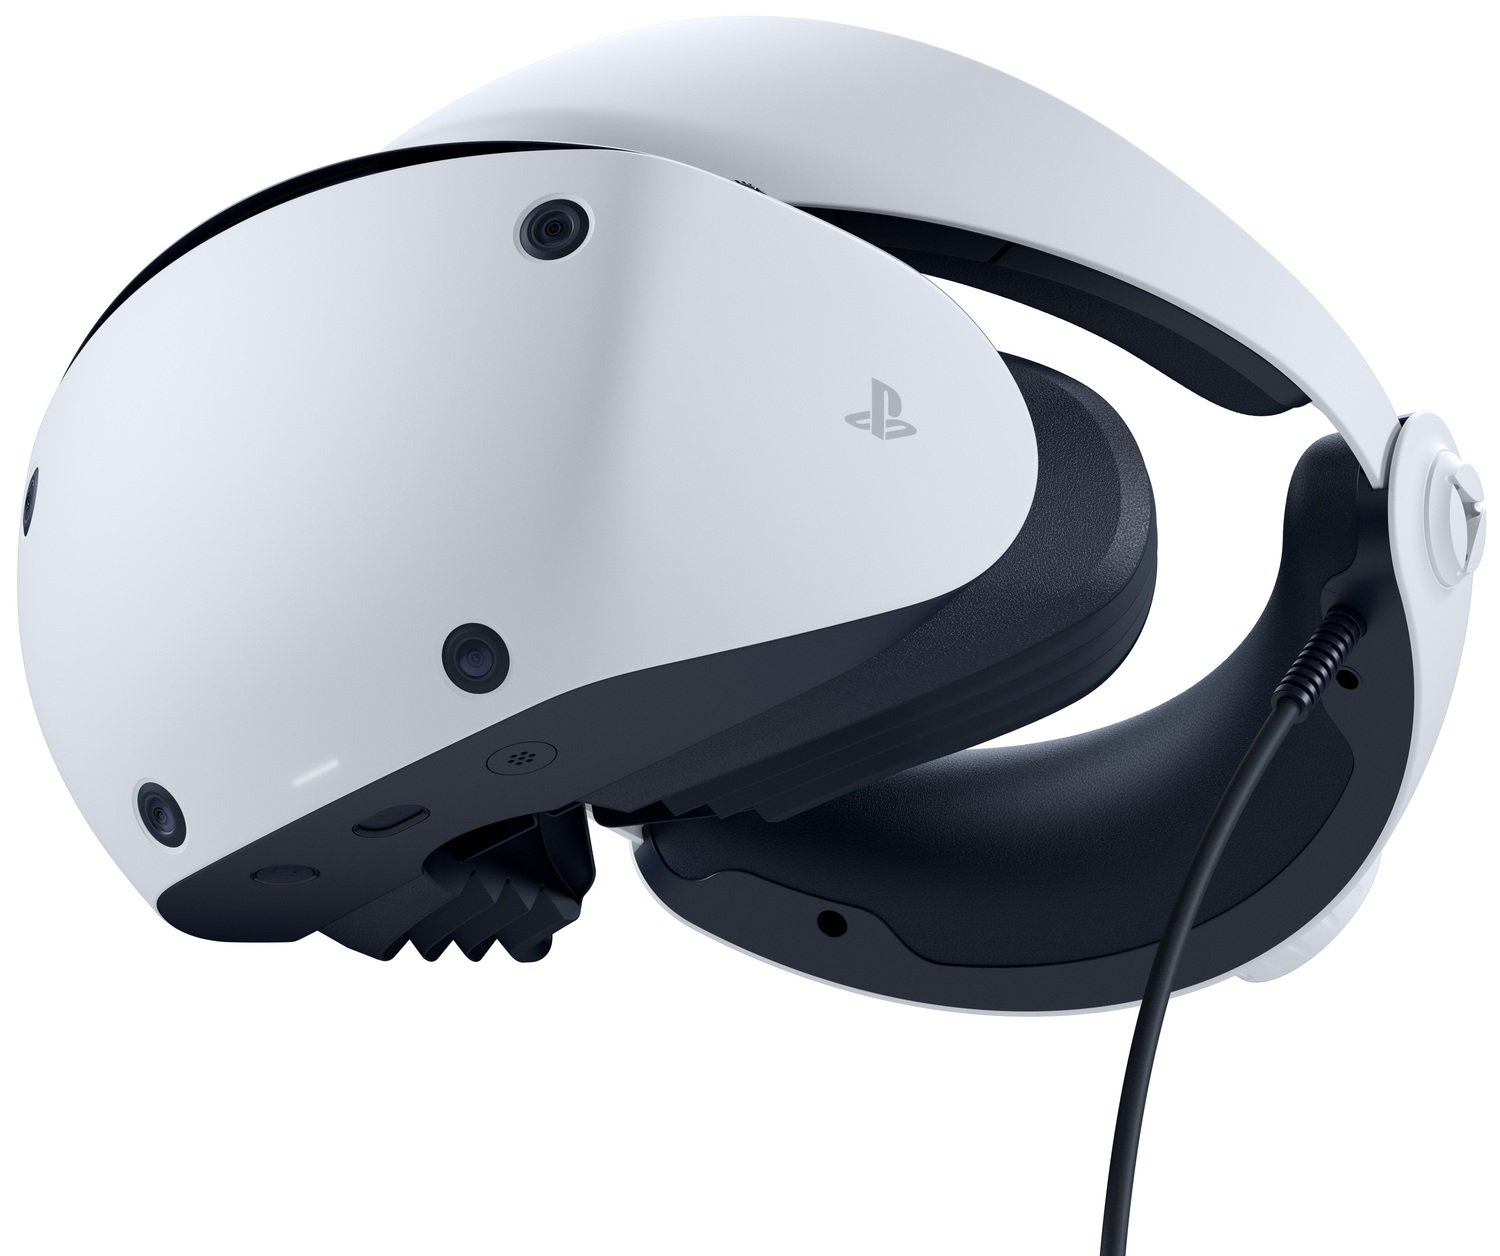 Очки виртуальной реальности PlayStation VR2 Horizon Call of the Mountain (1000036298) фото 